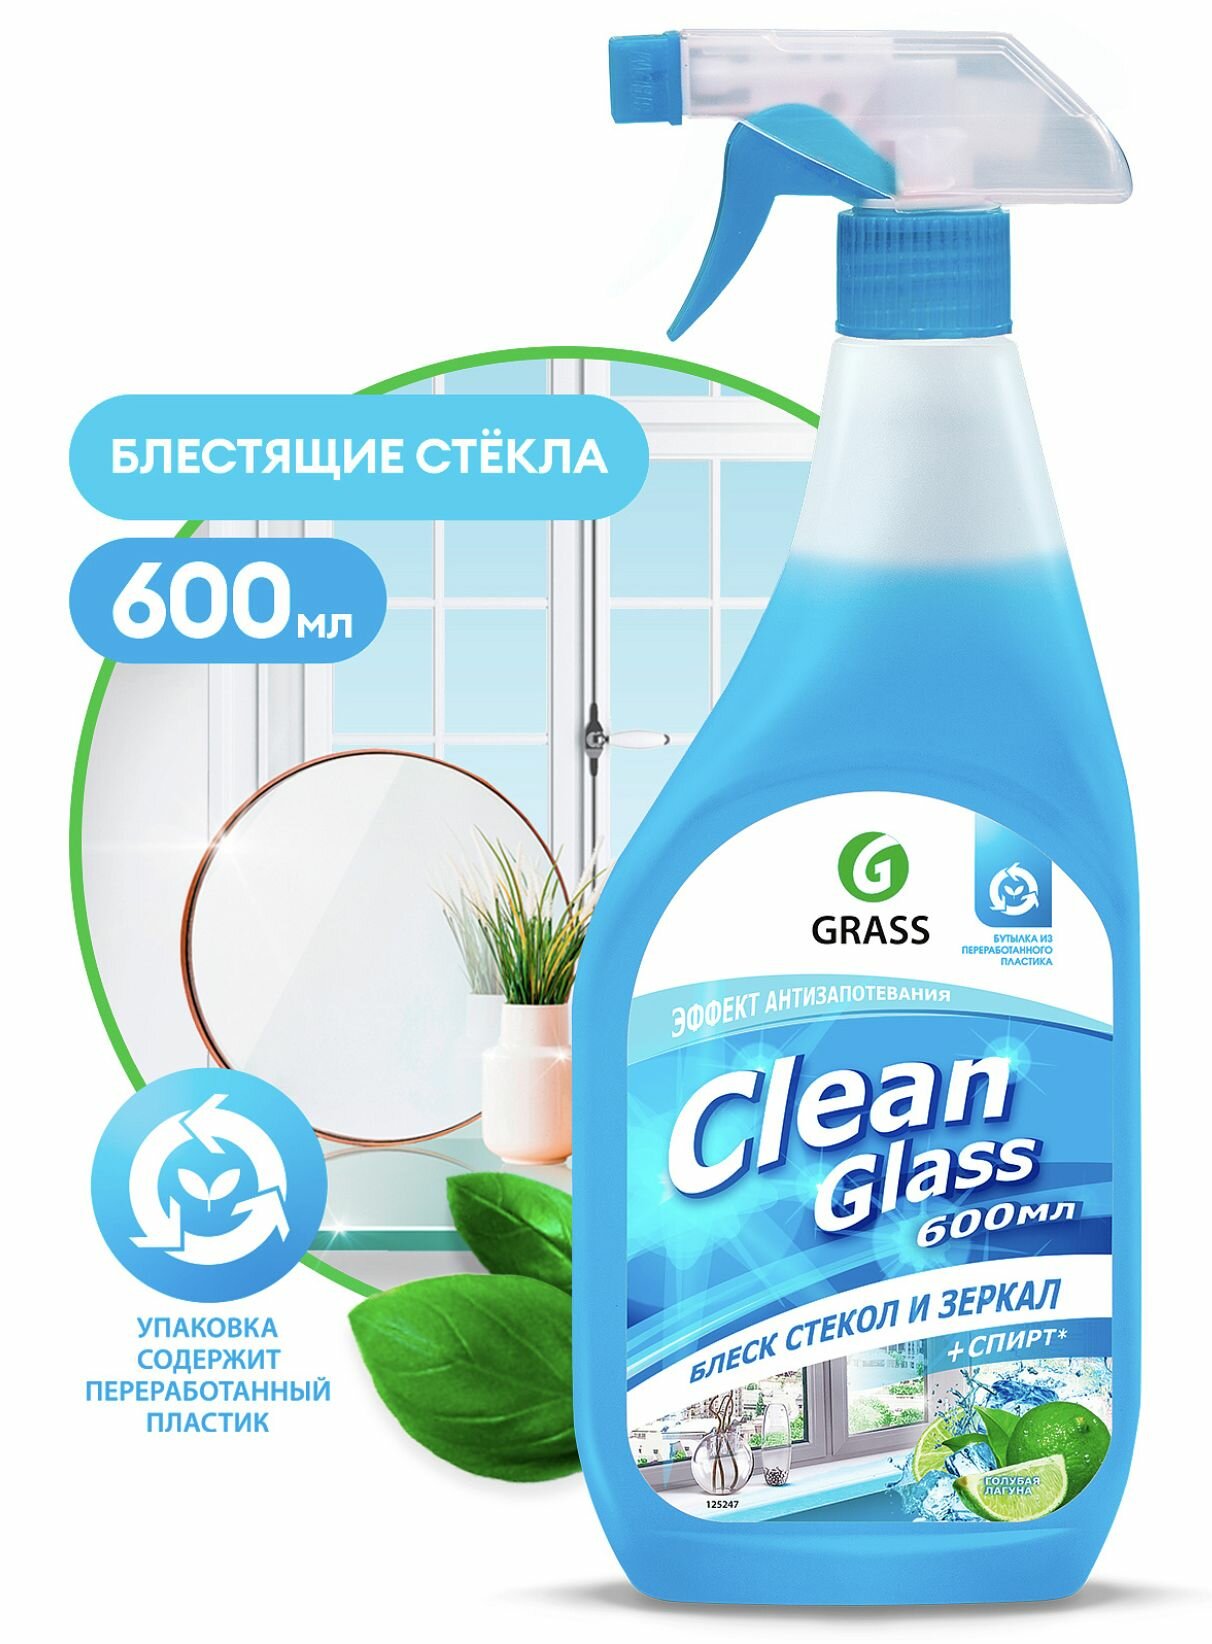 Очиститель стекол Clean Glass блеск стекол и зеркал (голубая лагуна) 600 мл. тригер